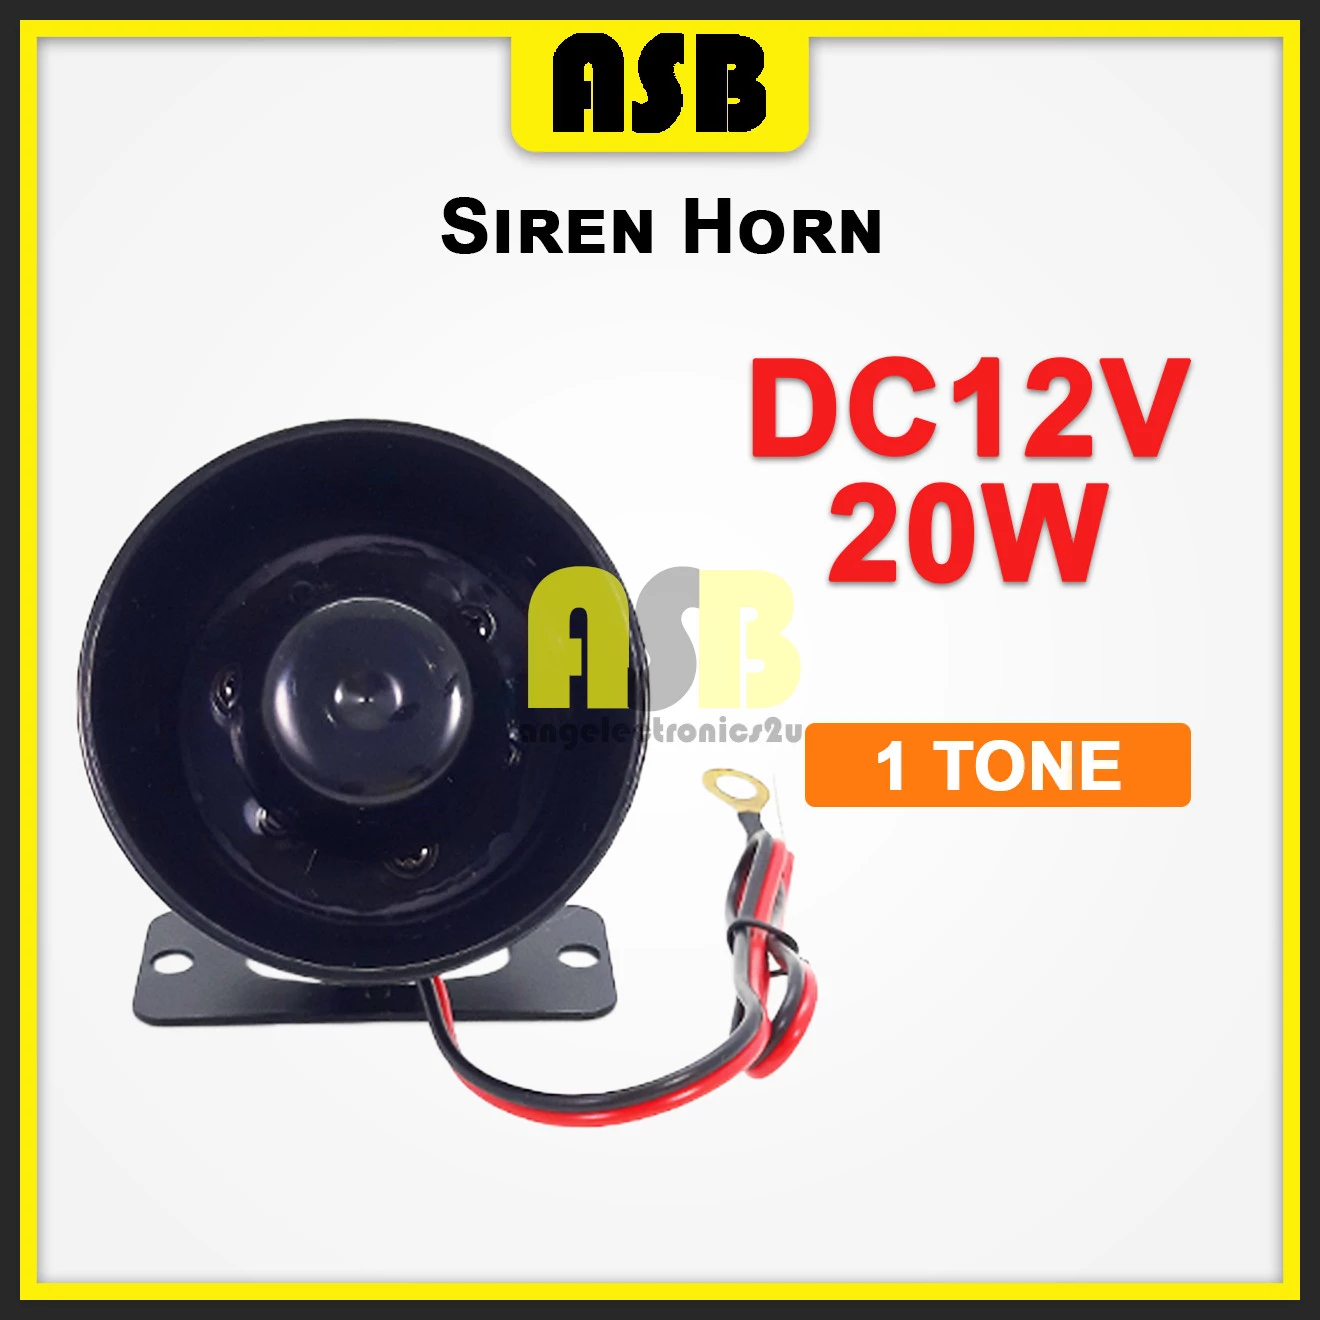 1 Tone Siren (ASB) (ADX-3006-1) DC 12V 20W (548002043)